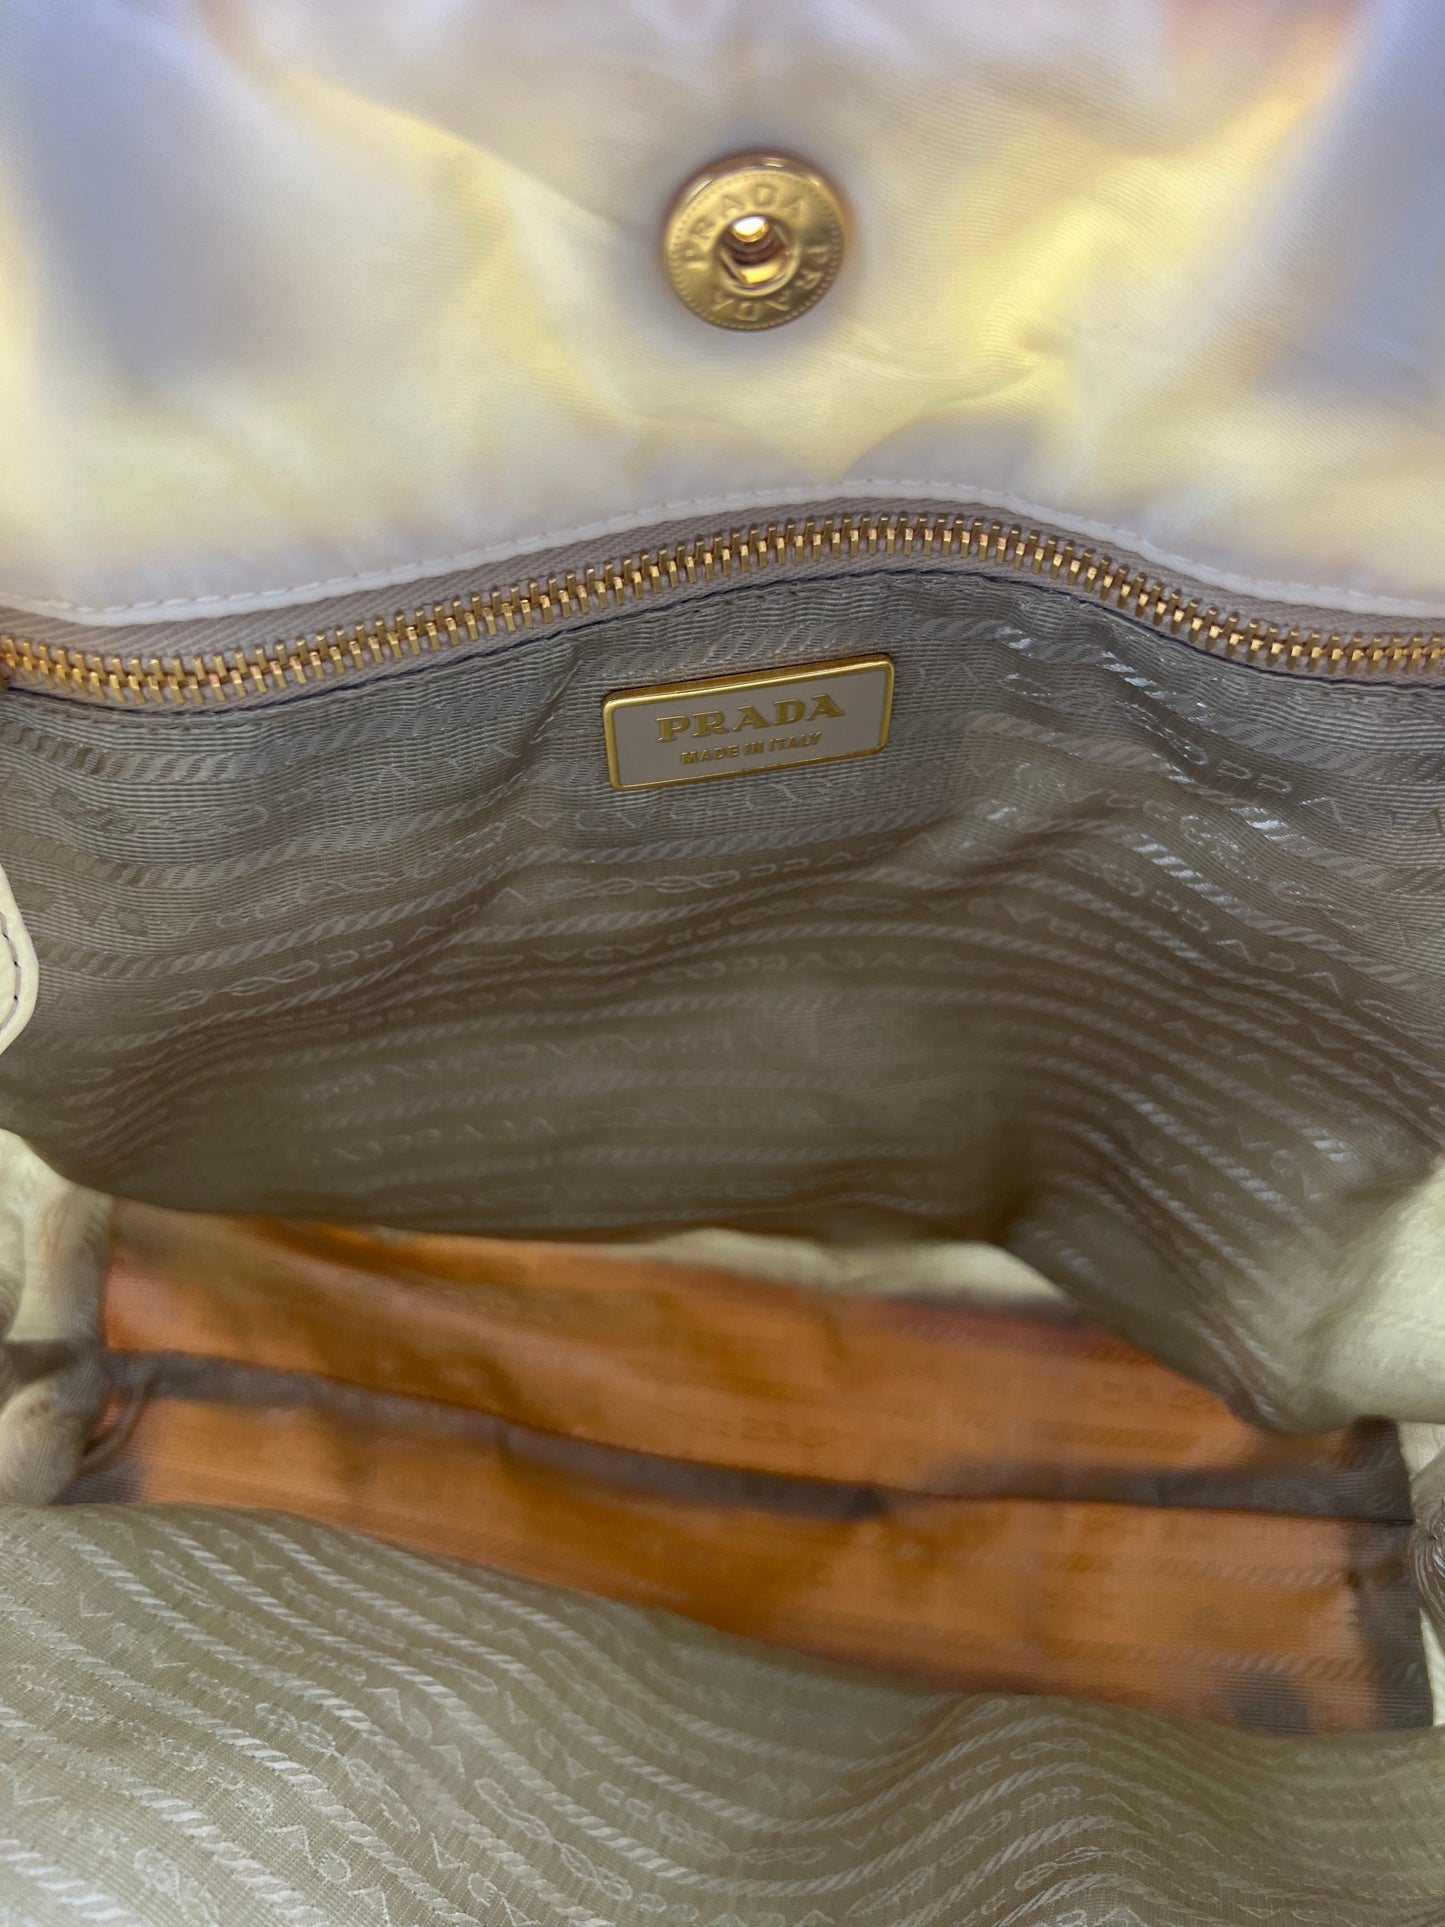 Prada Quilted Puffer Handbag